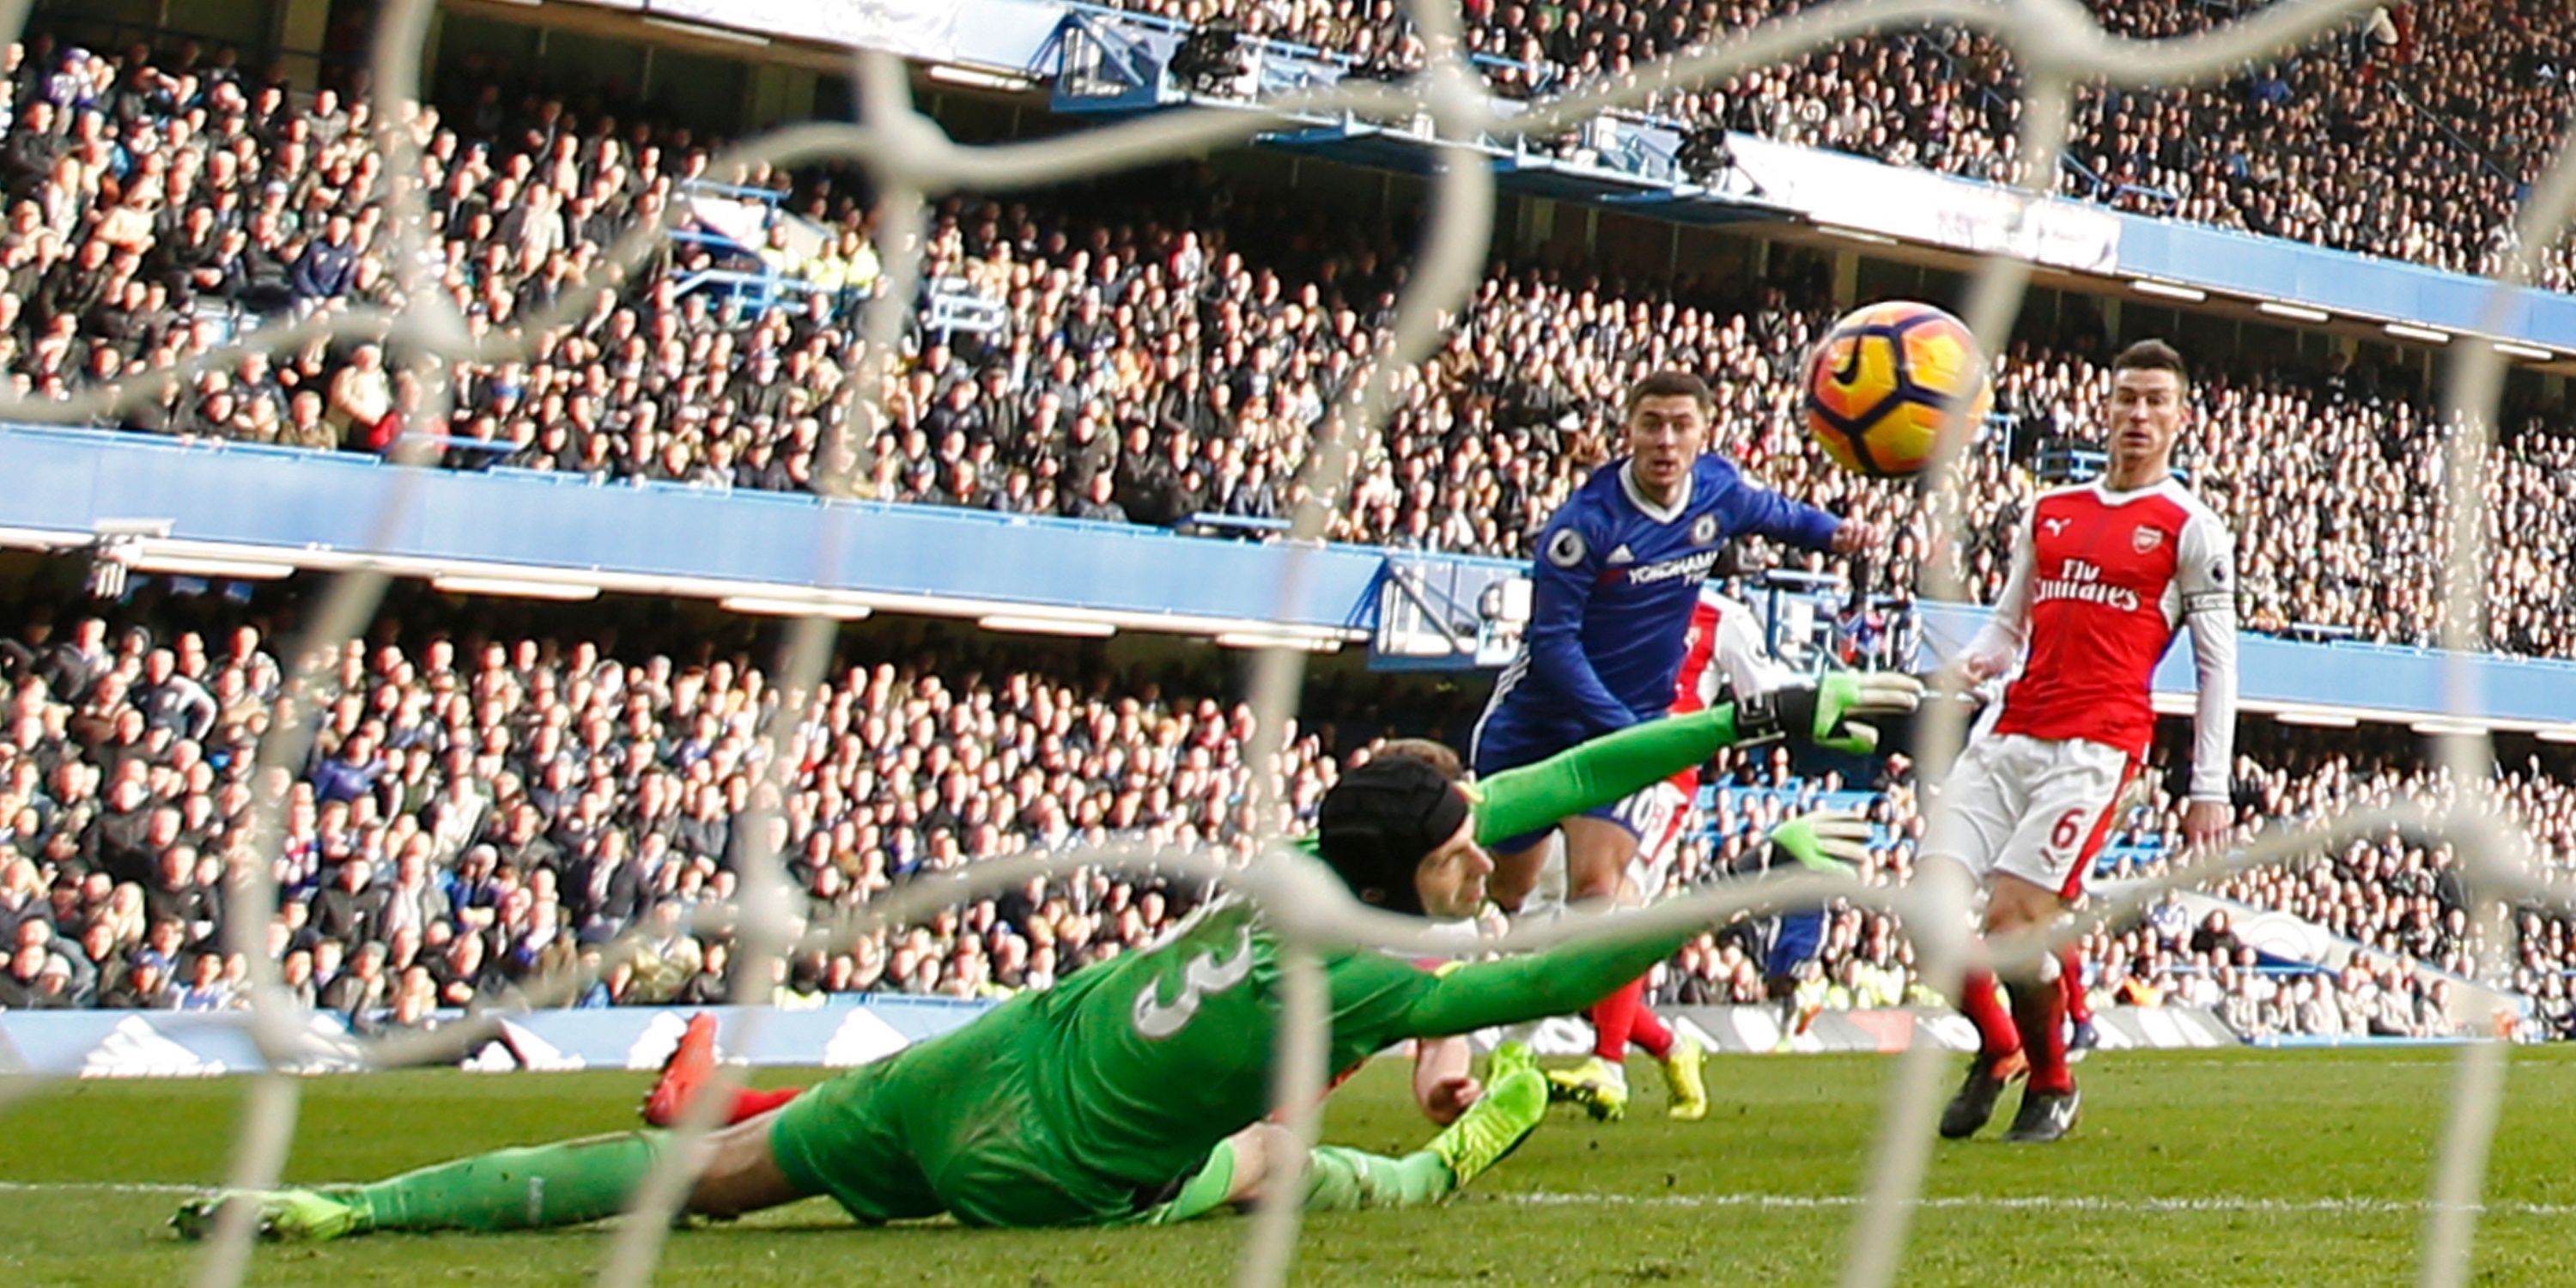 Chelsea's Eden Hazard lifts the ball over Arsenal's Petr Cech.